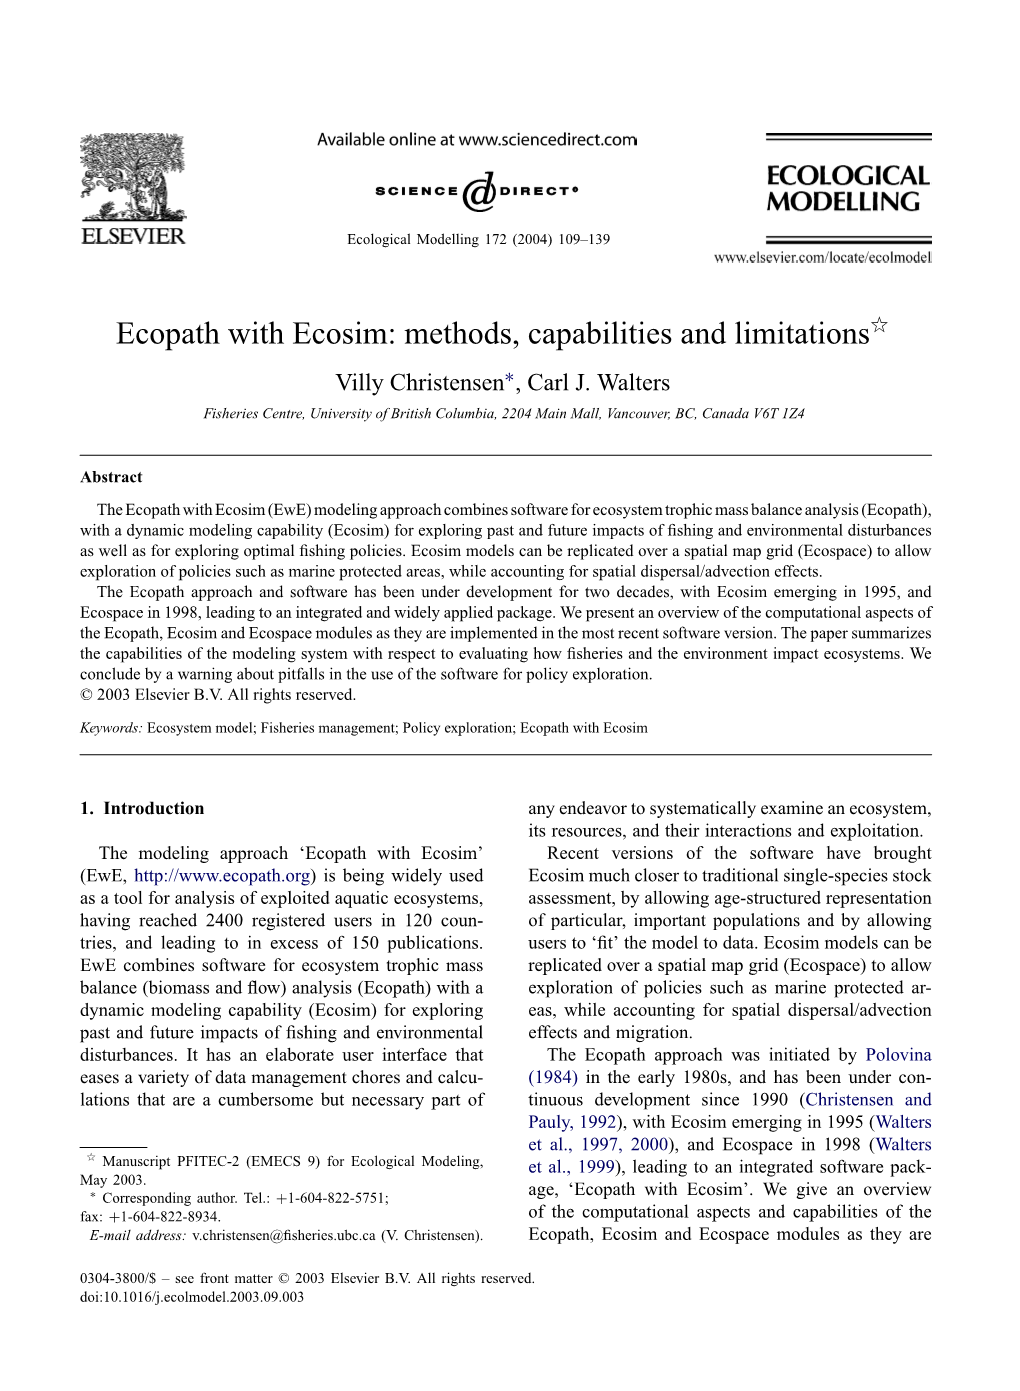 Ecopath with Ecosim: Methods, Capabilities and Limitationsଝ Villy Christensen∗, Carl J